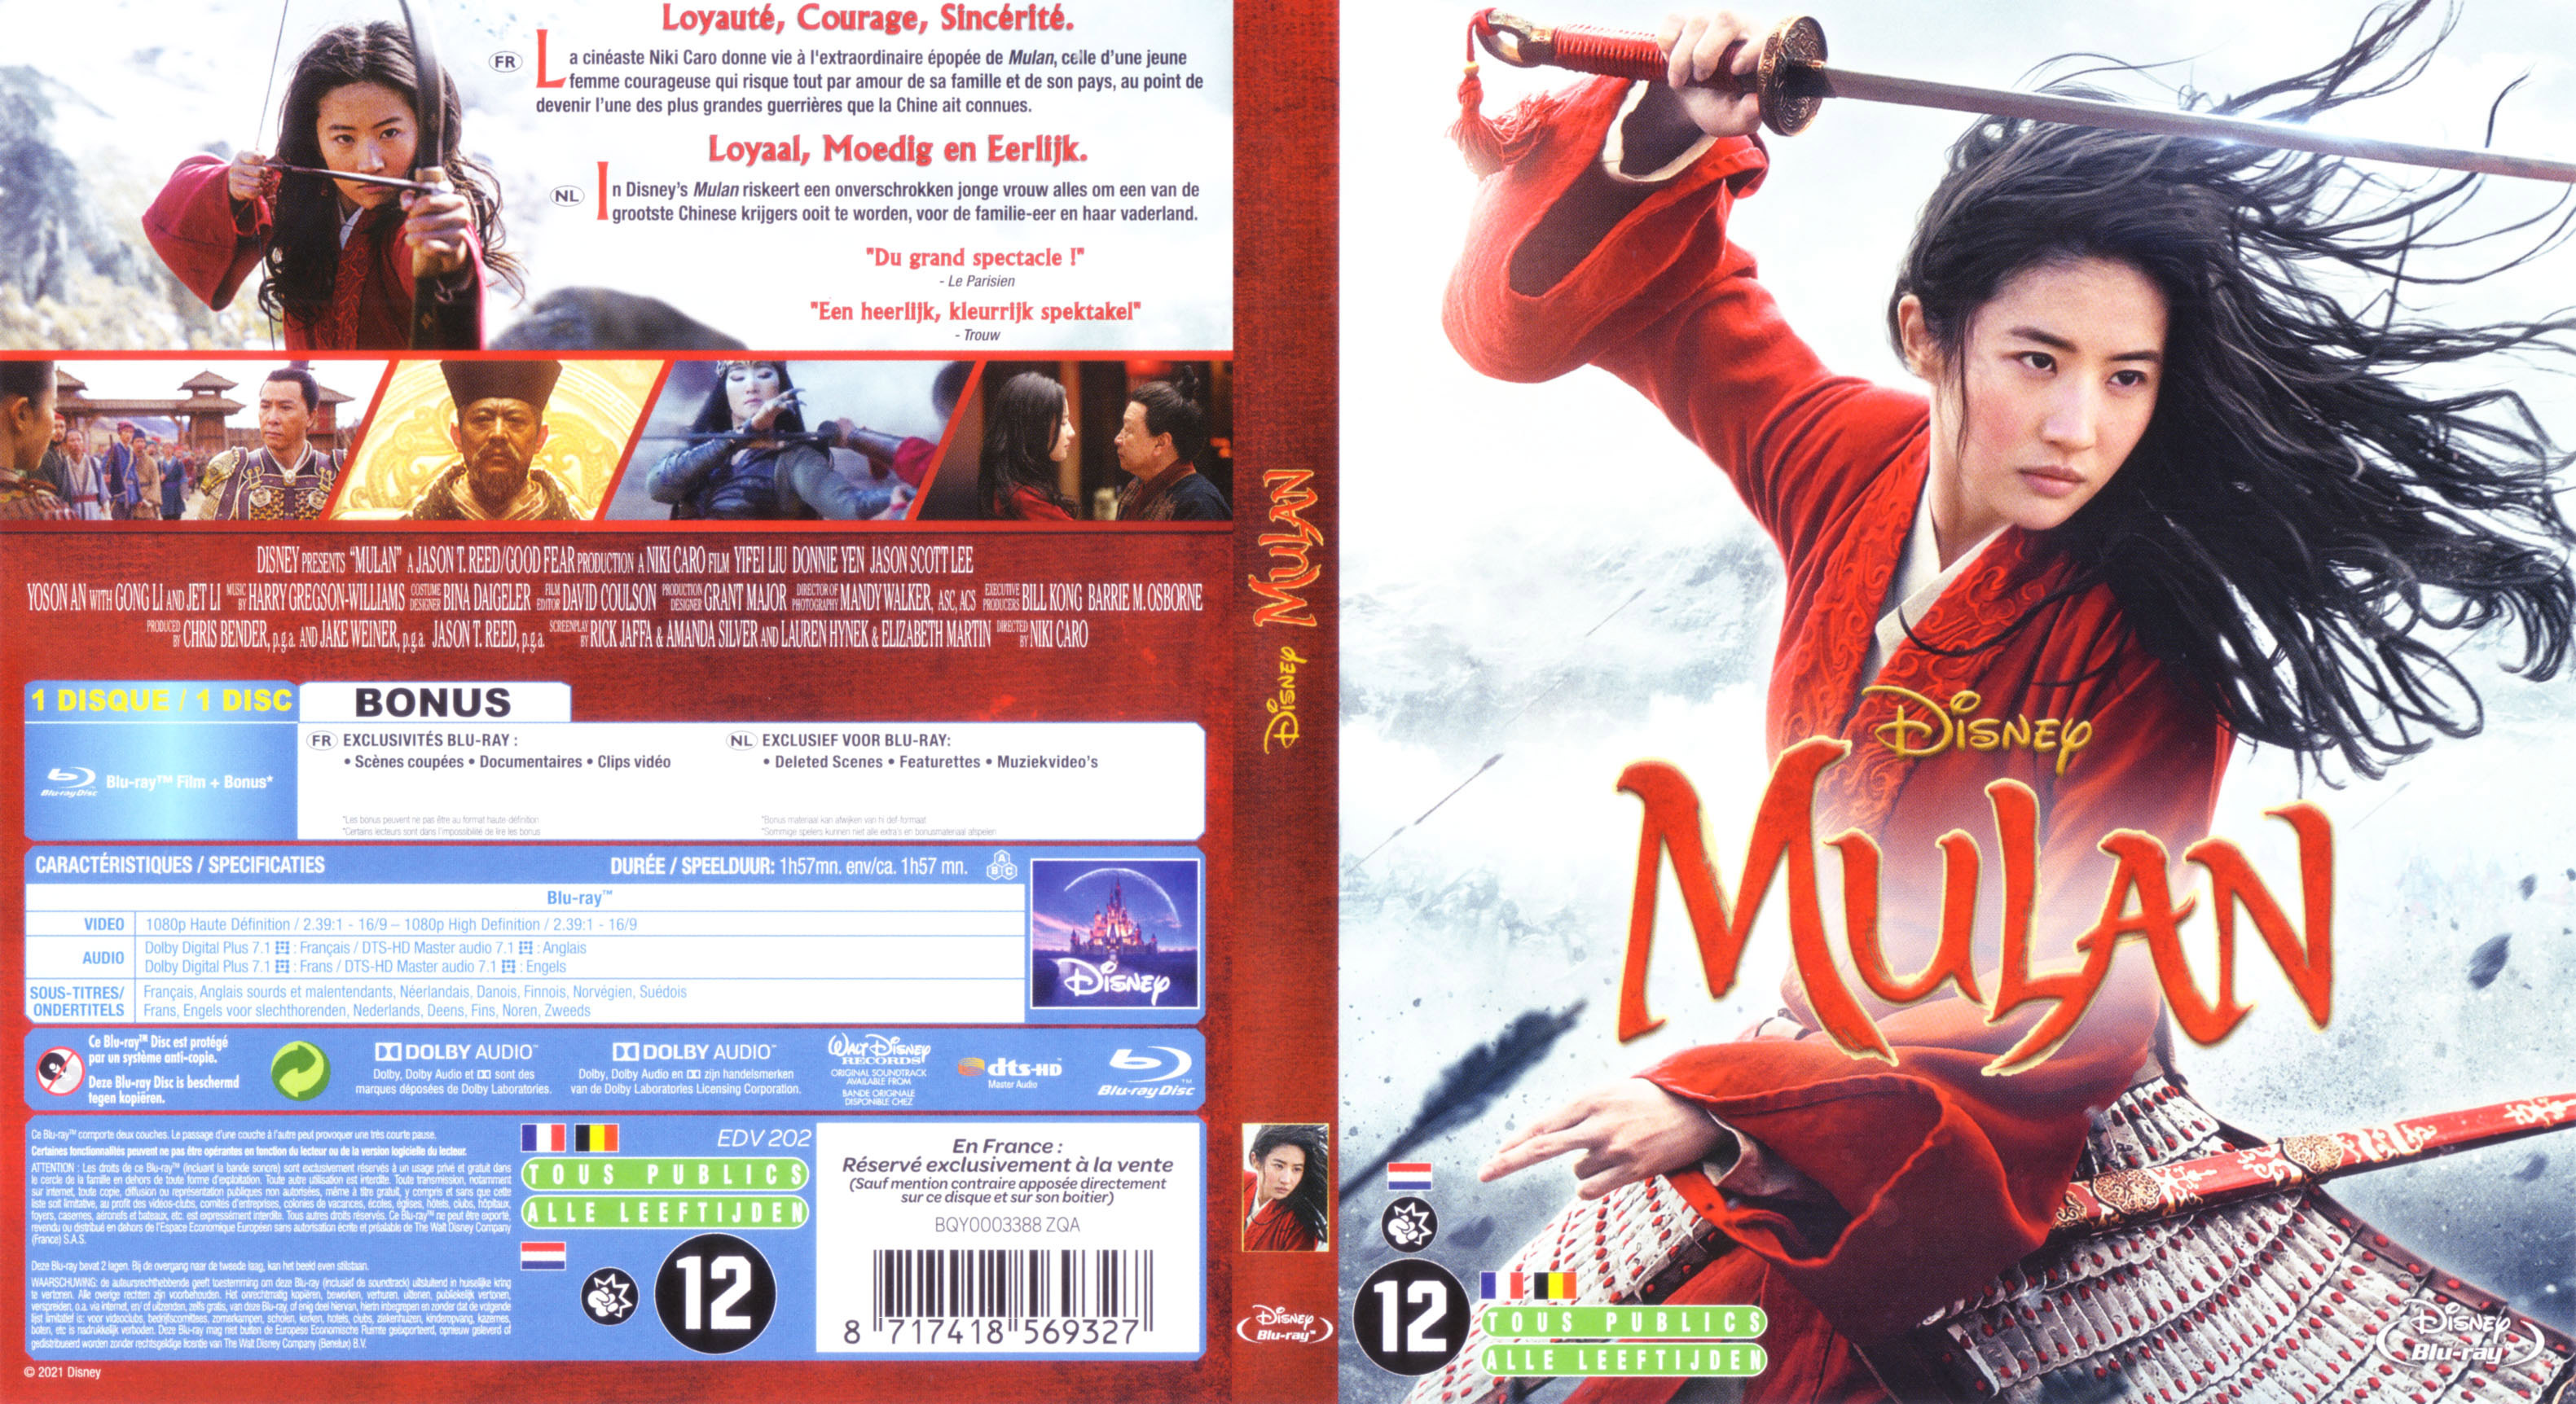 Jaquette DVD Mulan 2020 (BLU-RAY)